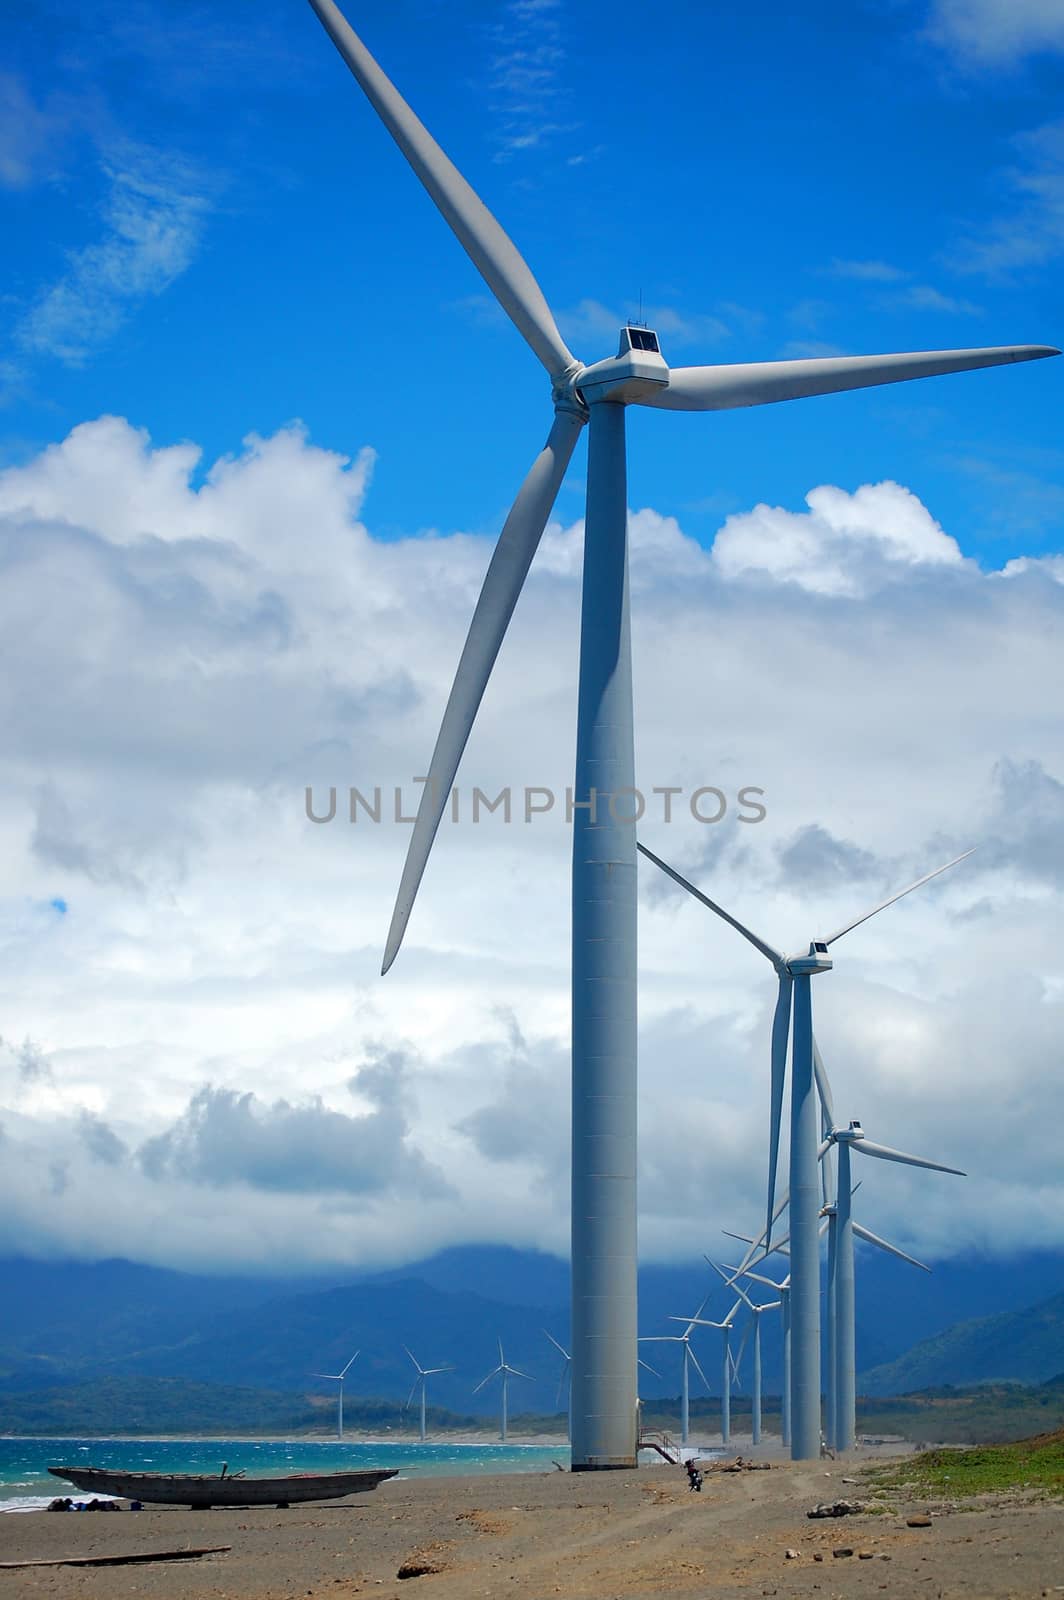 Bangui Wind Farm windmills in Ilocos Norte, Philippines by imwaltersy